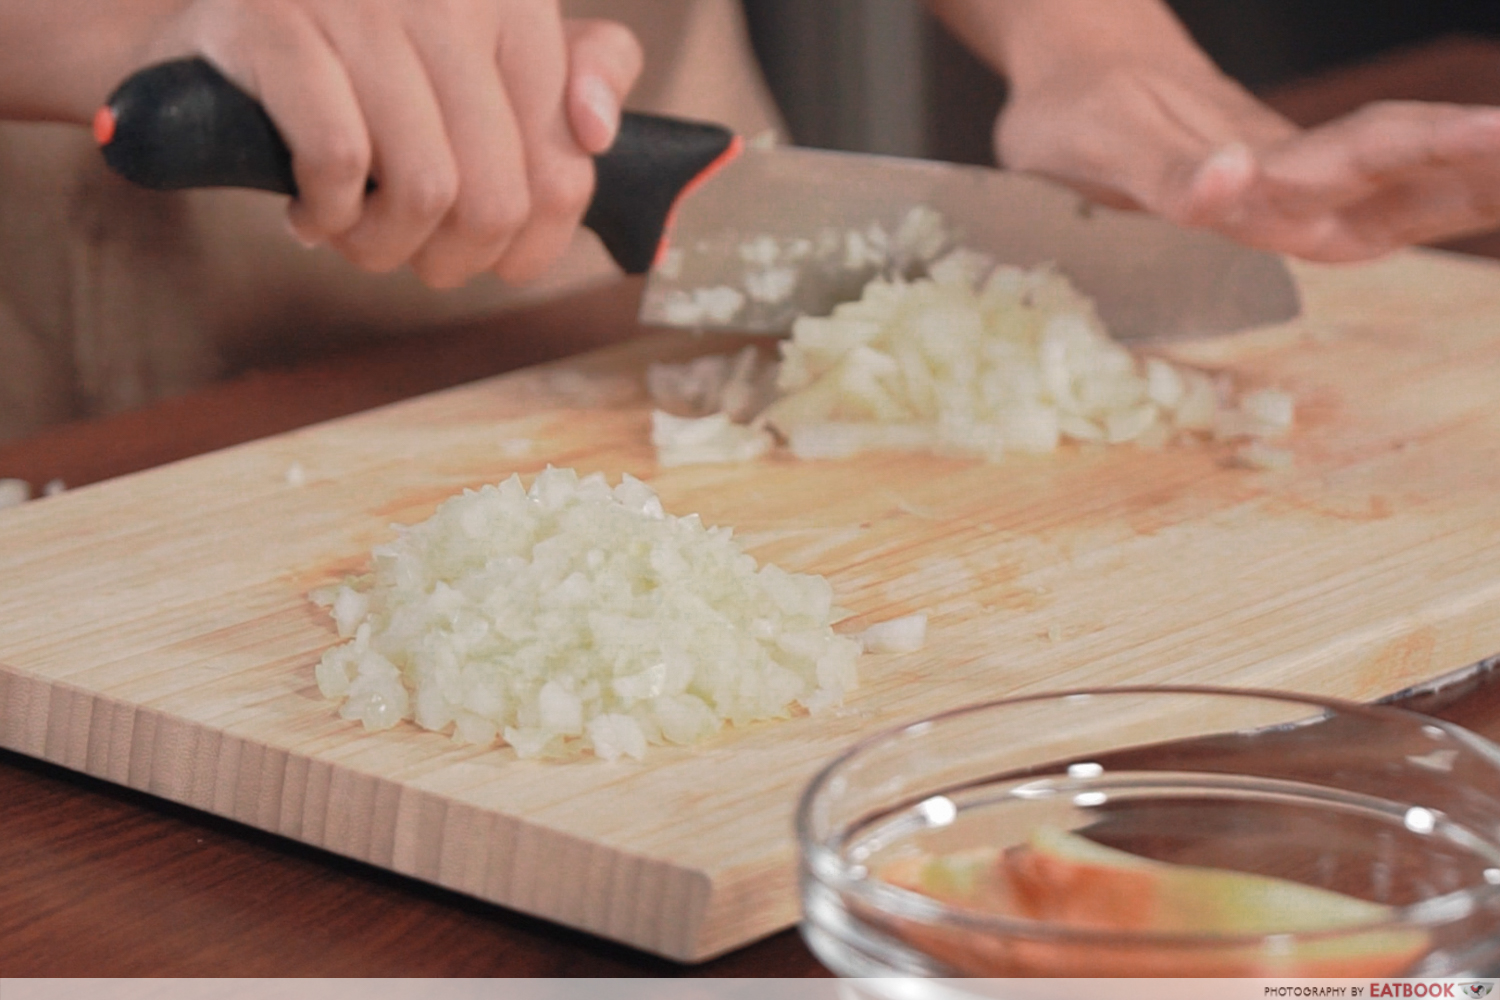 IKEA Meatballs recipe - Chopping onions